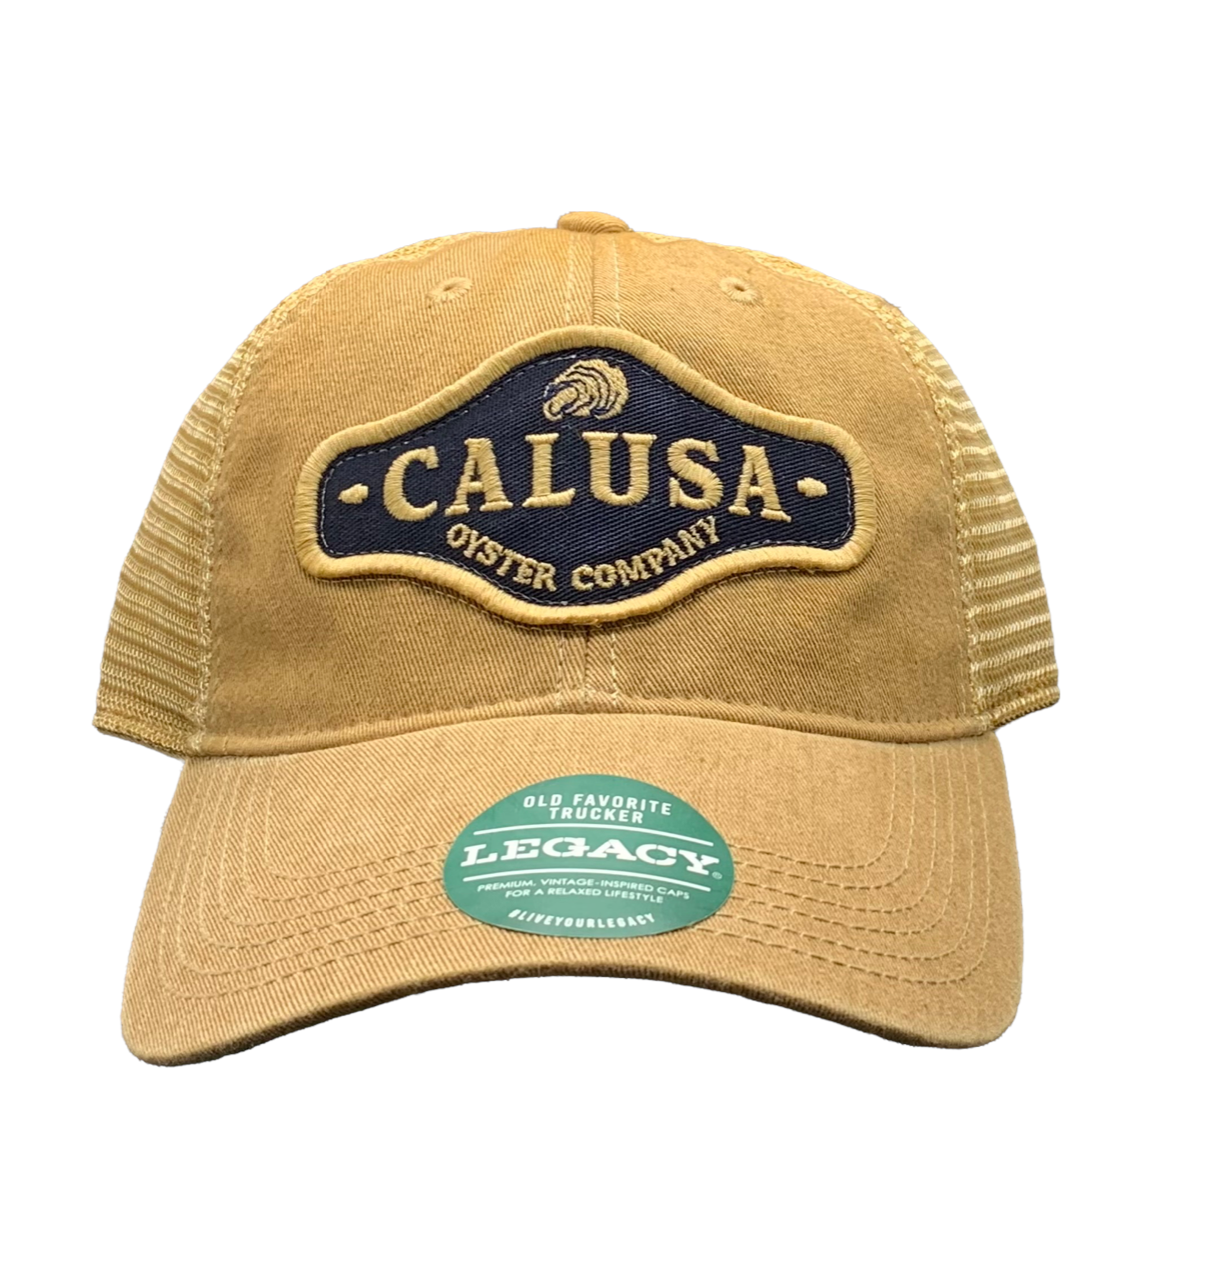 Calusa "Farm" Hat